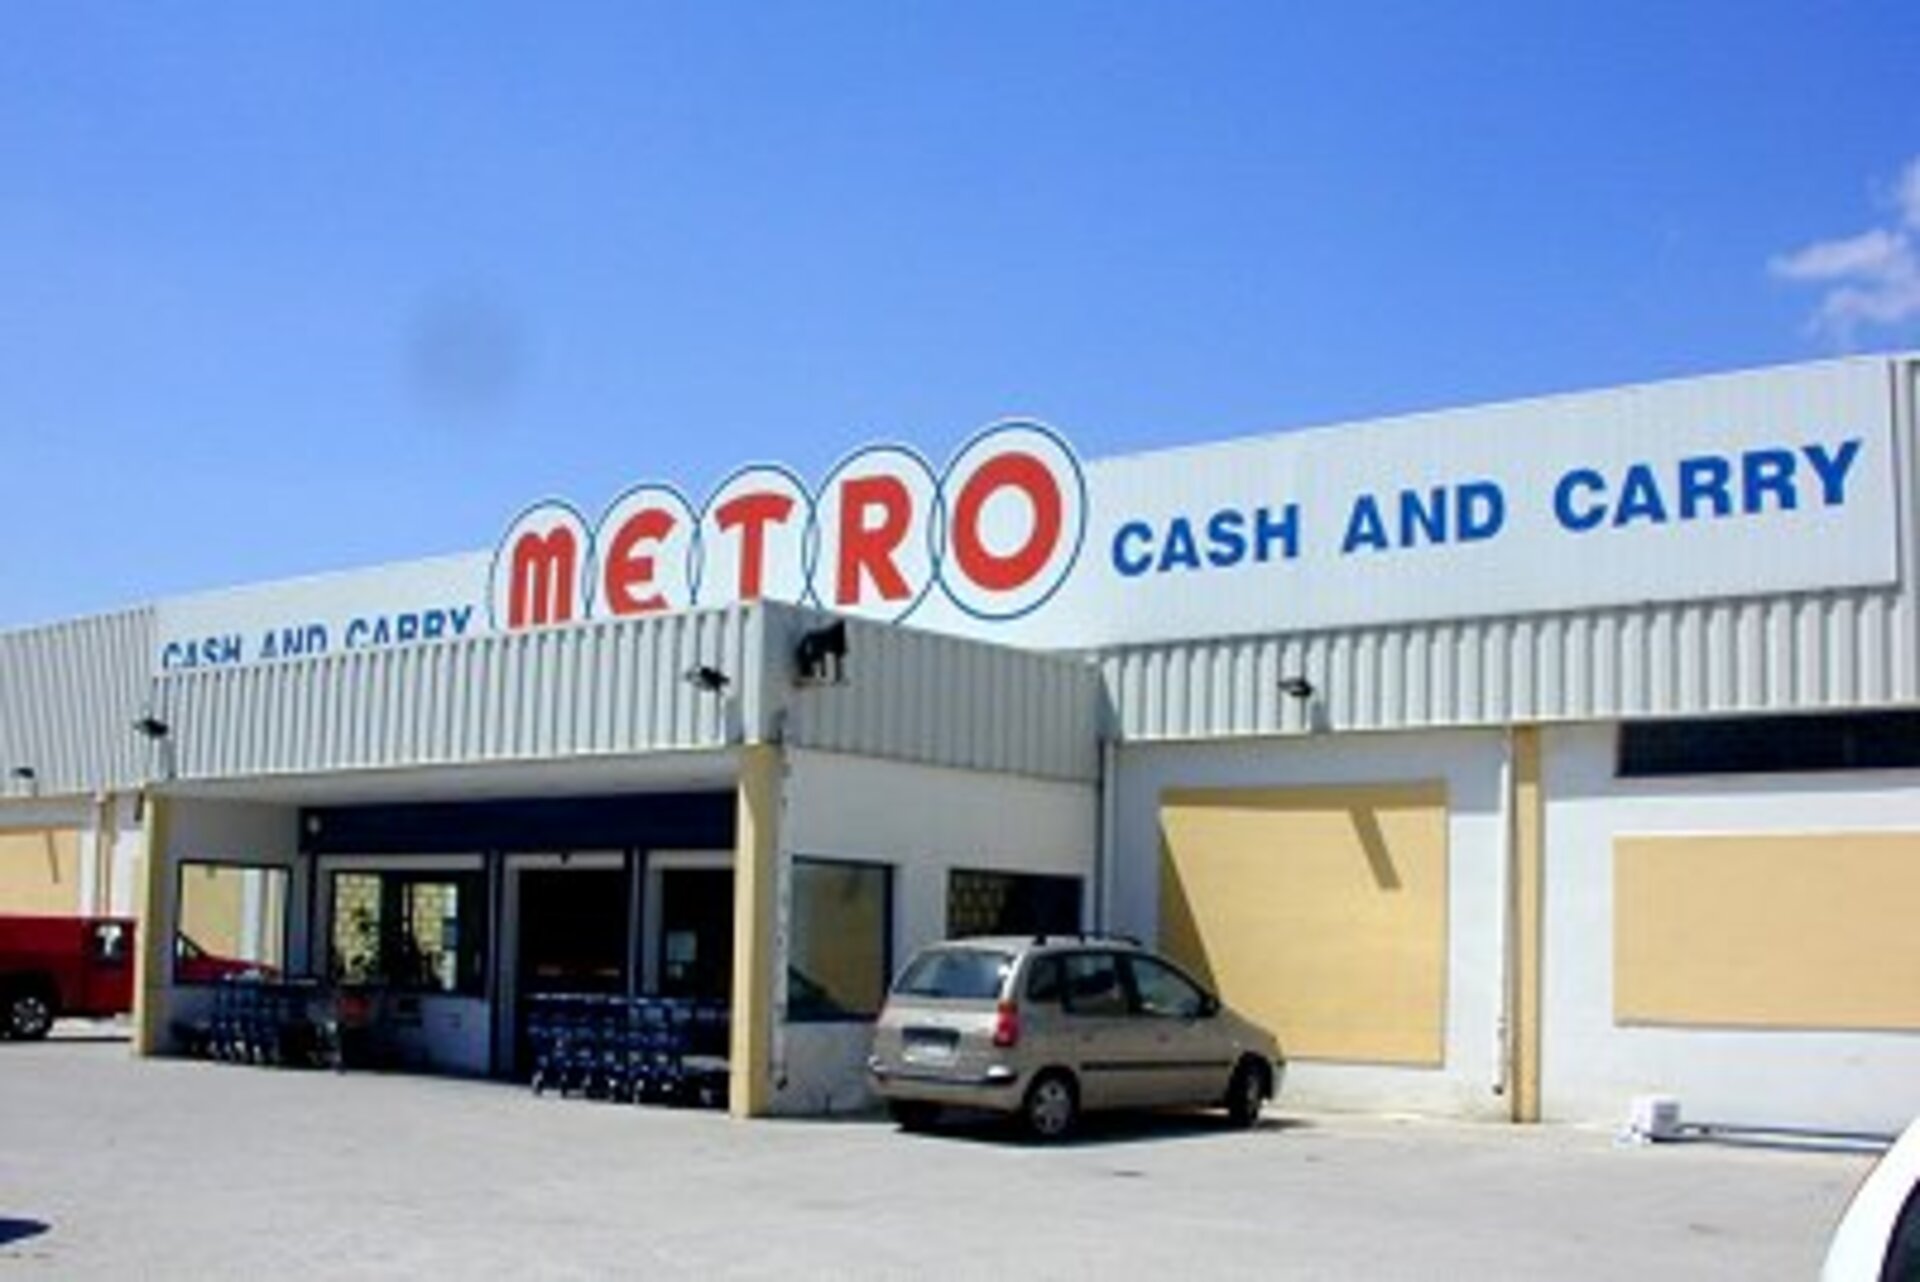 Metro S.A. supermarket chain